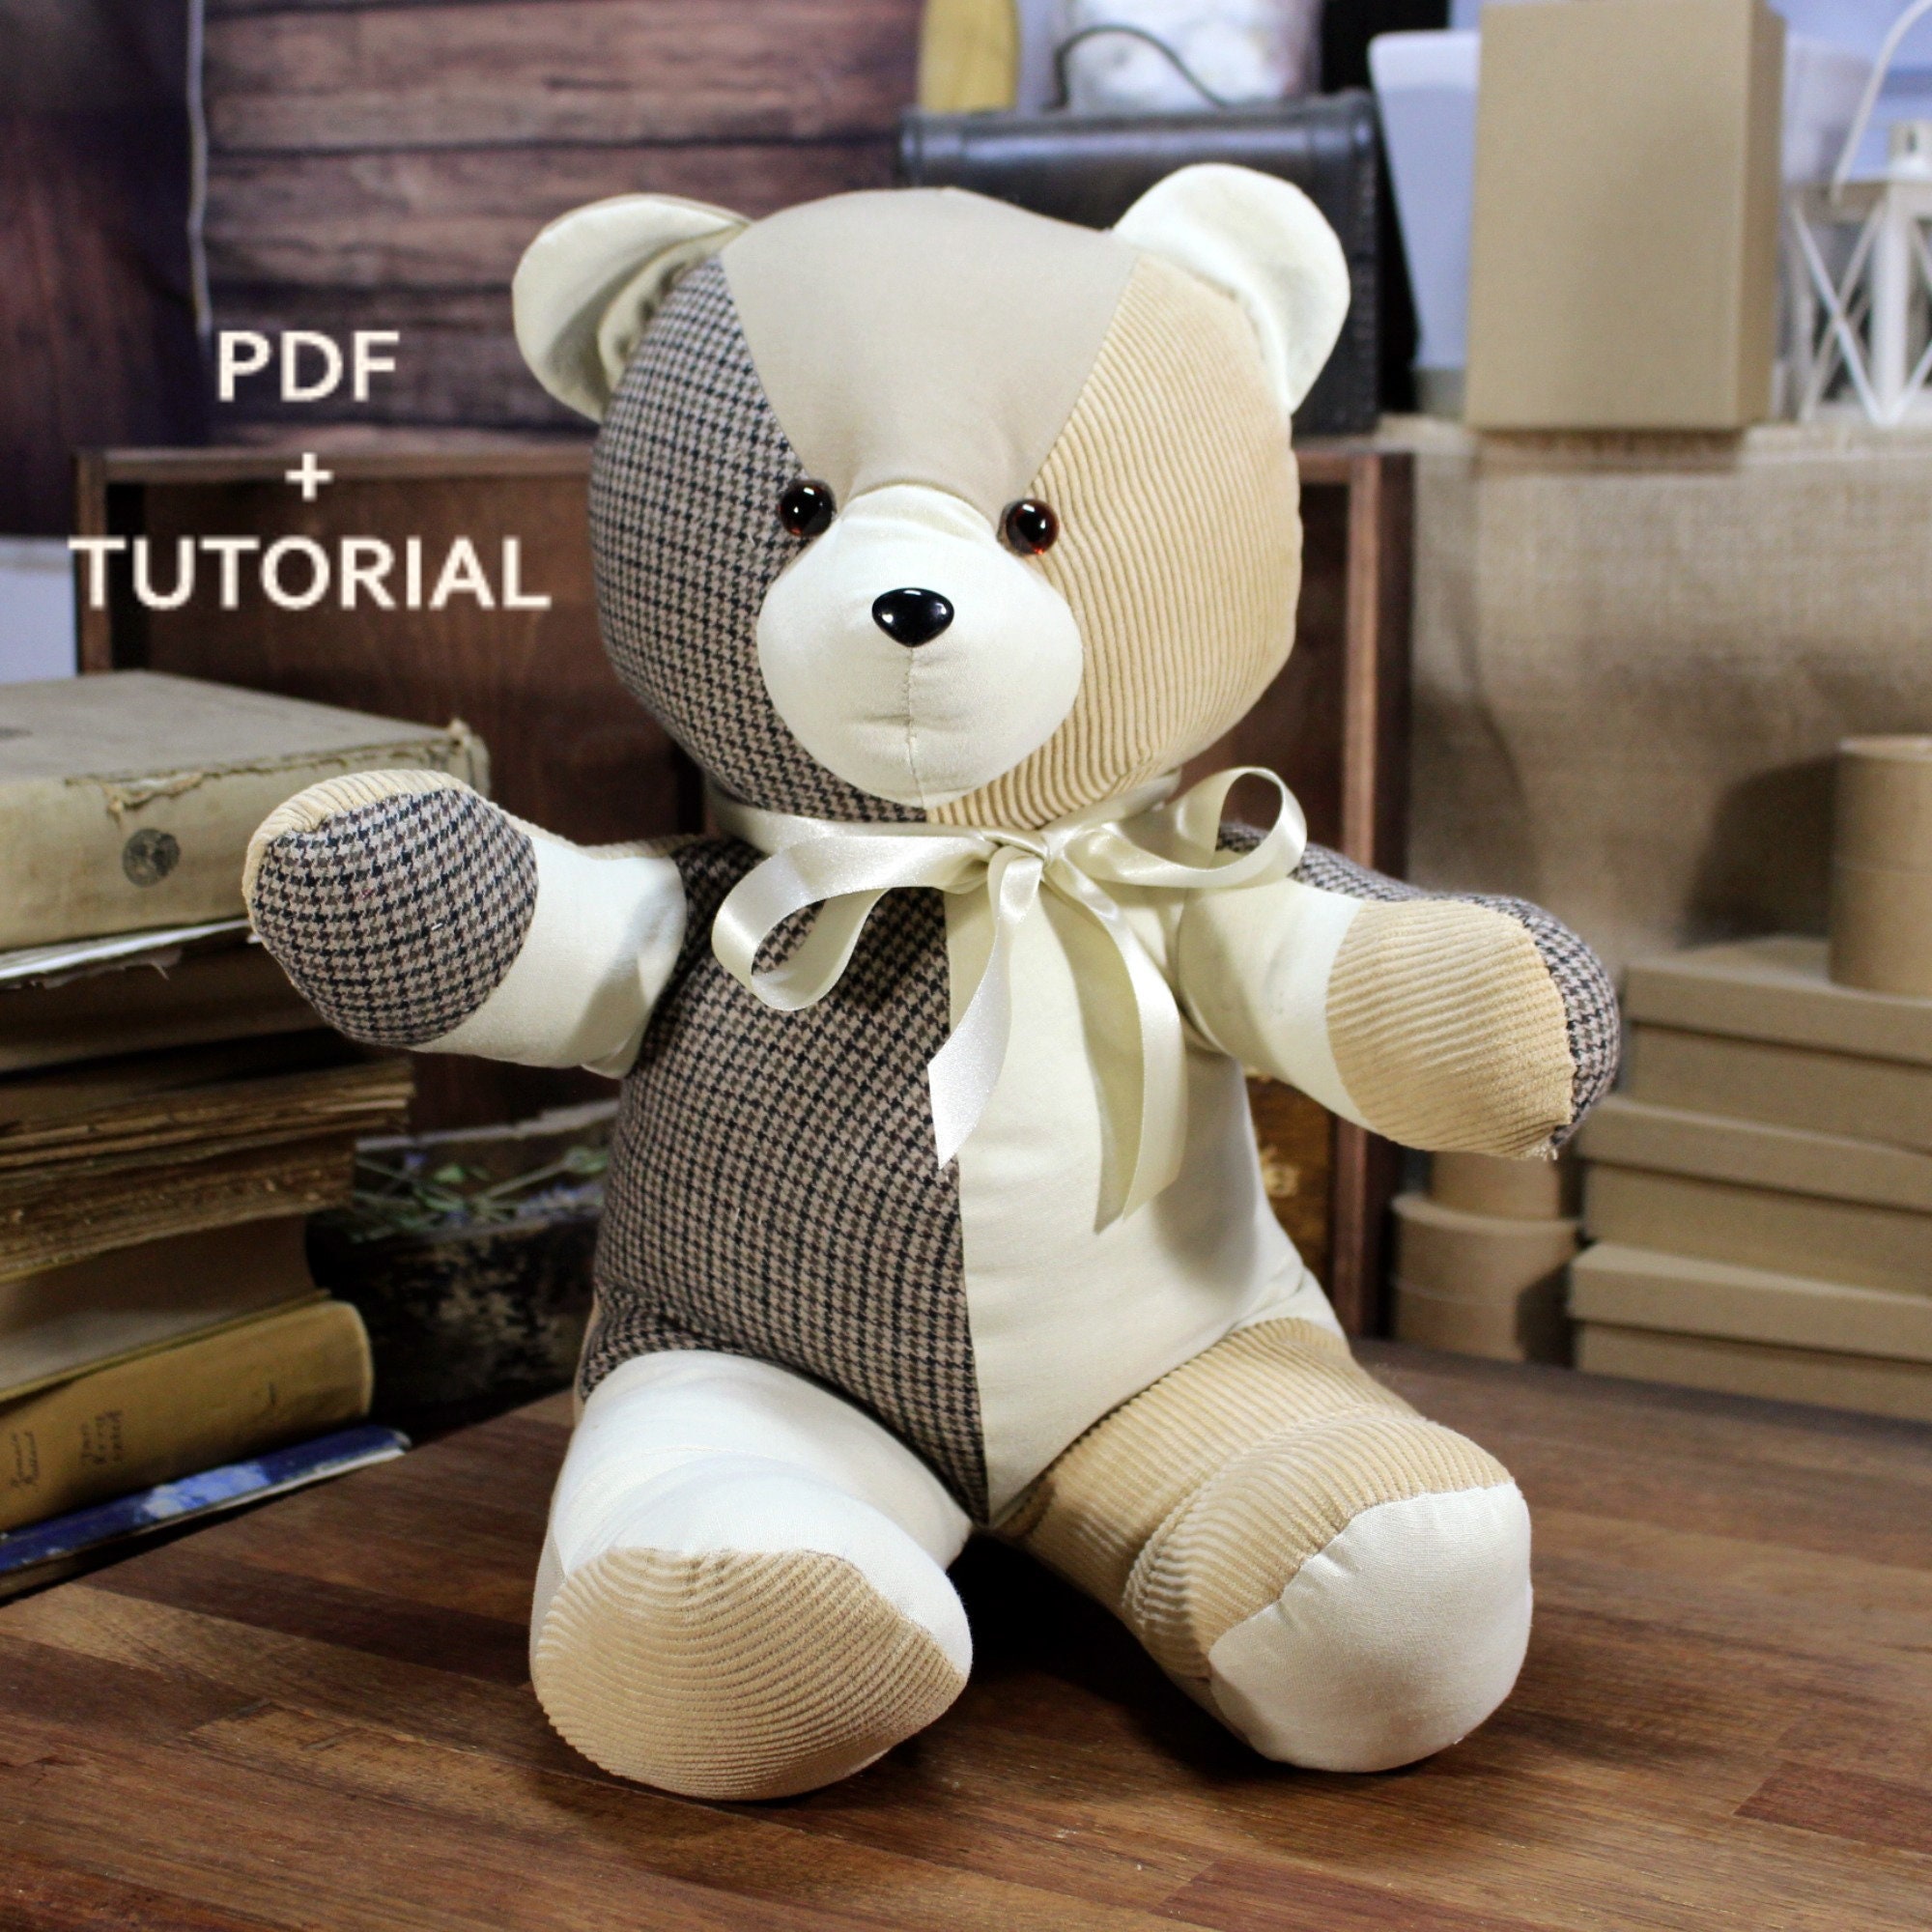 Free Memory Bear Pattern To Print - - Image Search Results  Teddy bear  sewing pattern, Bear patterns free, Teddy bear patterns free